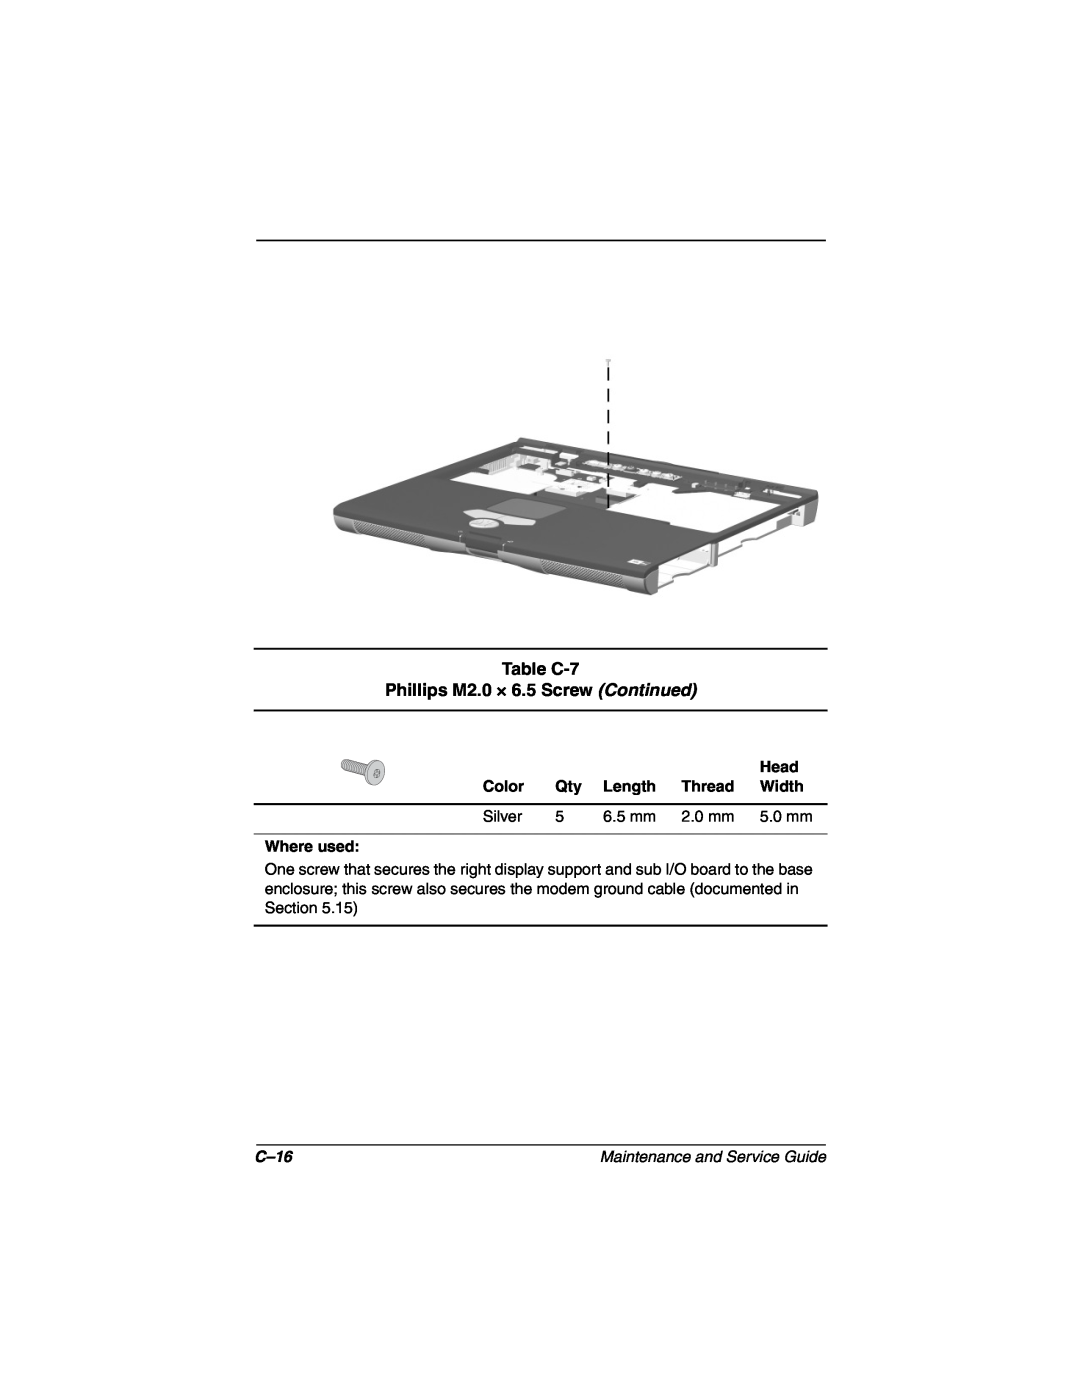 Compaq N160 manual Table C-7 Phillips M2.0 × 6.5 Screw Continued, C-16 